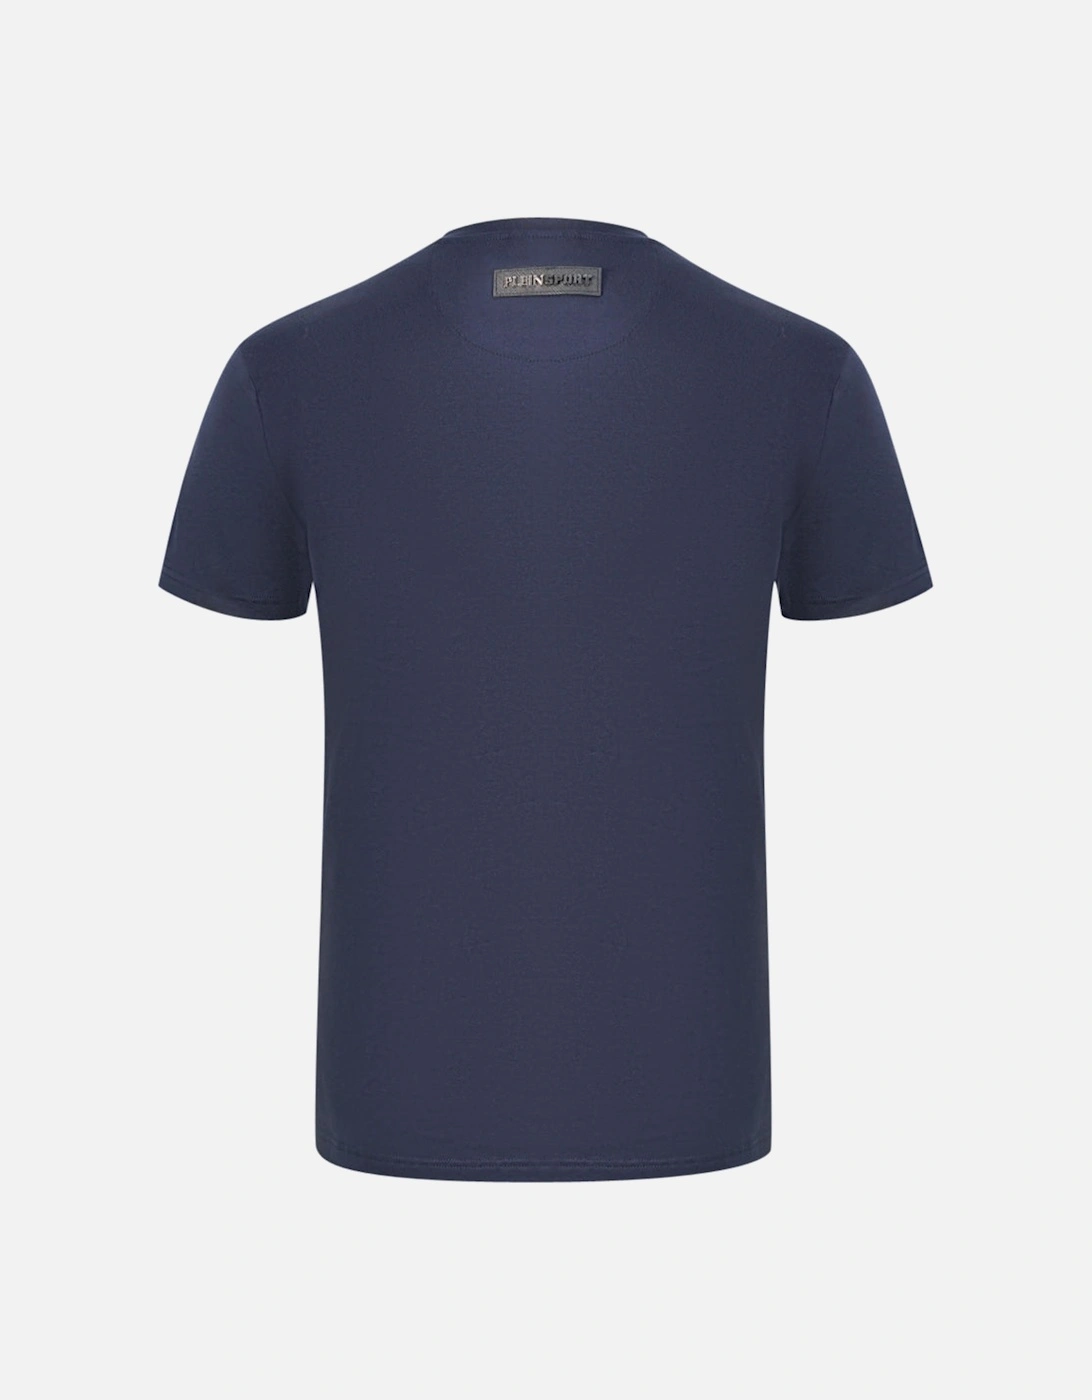 Plein Sport Tigerhead Bold Logo Navy Blue T-Shirt